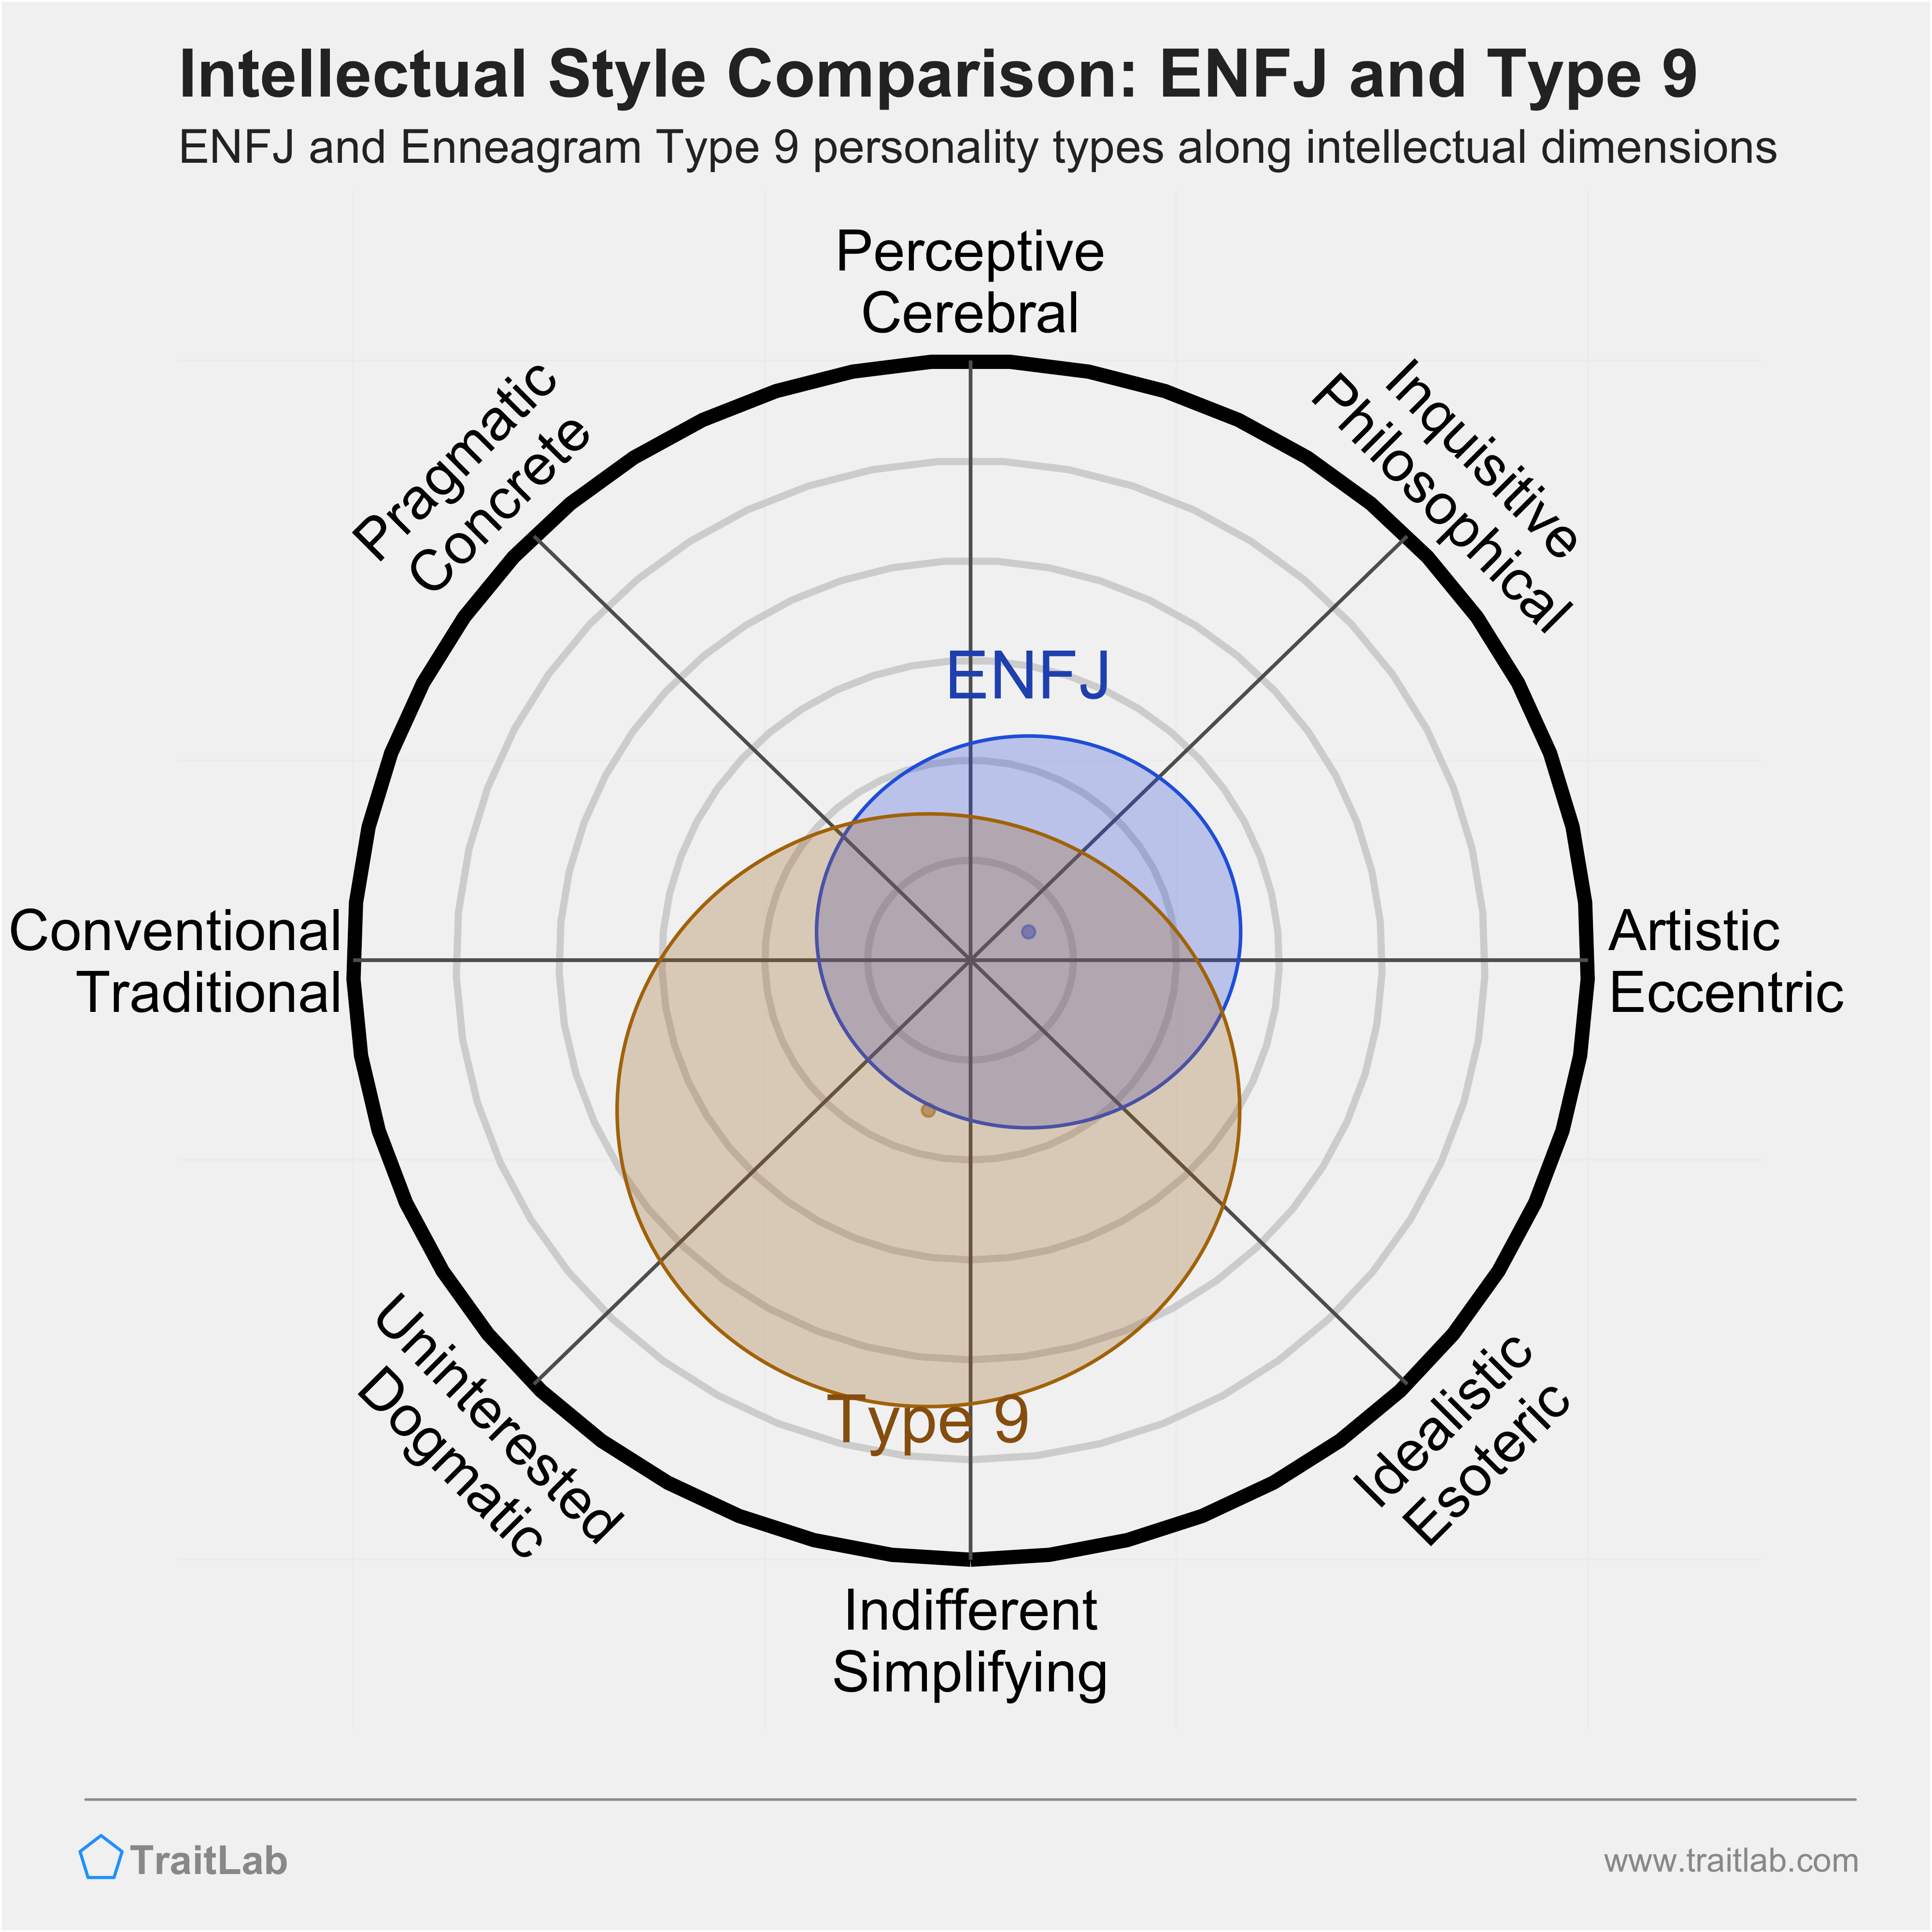 ENFJ and Type 9 comparison across intellectual dimensions